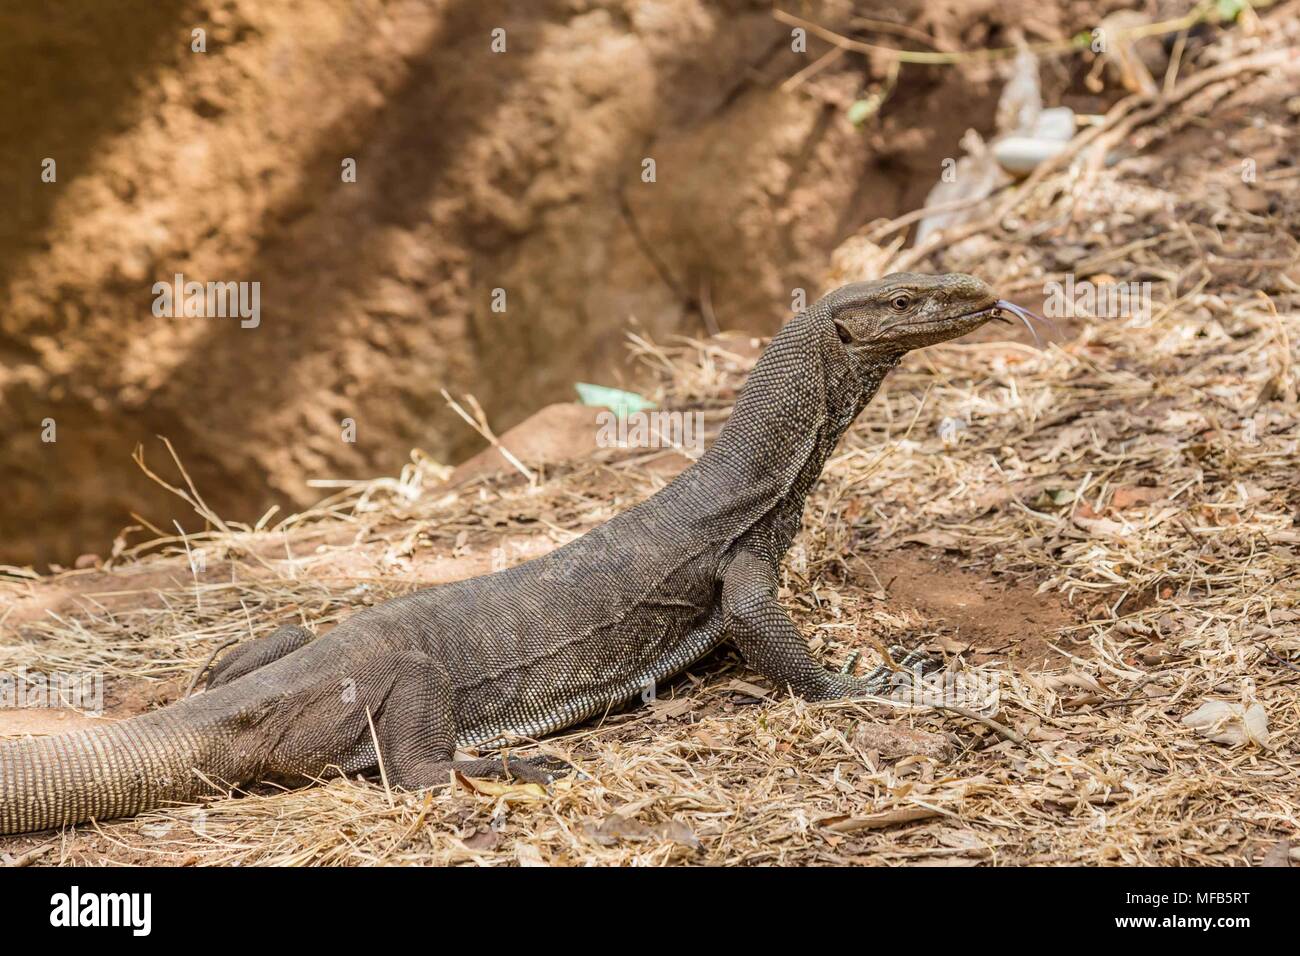 Bengal Monitor Lizard in Sri Lanka Stock Photo